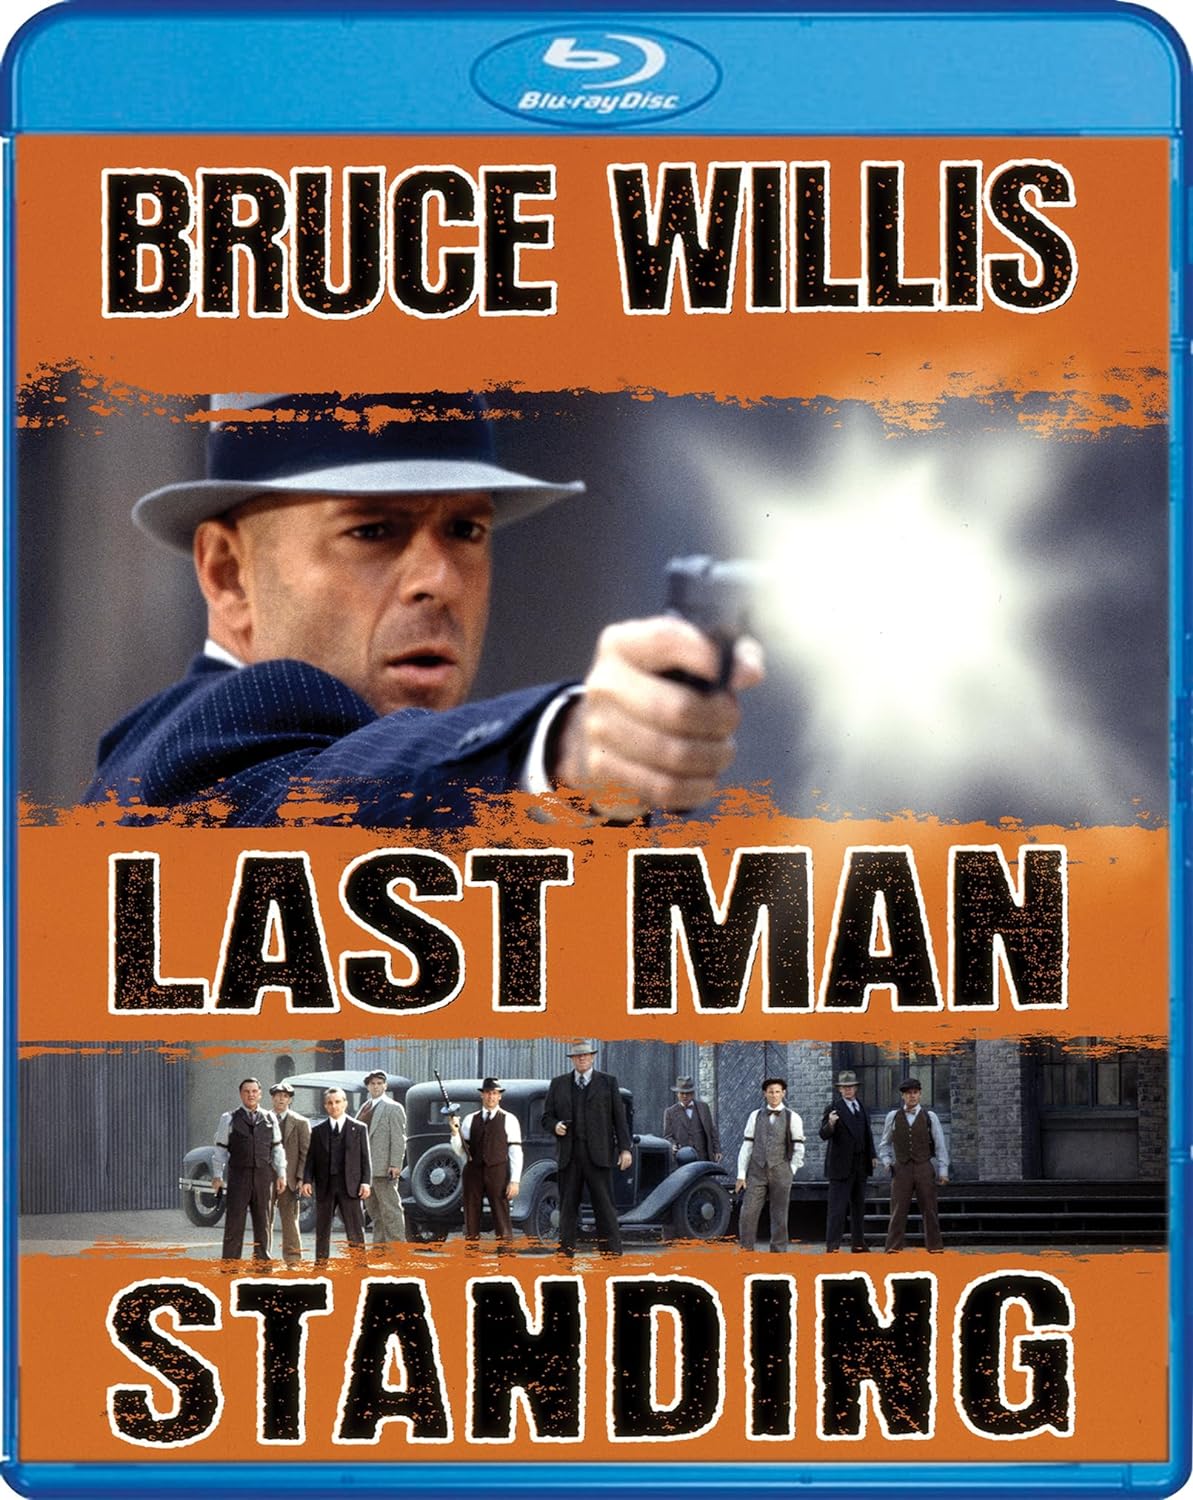 LAST MAN STANDING (1996)